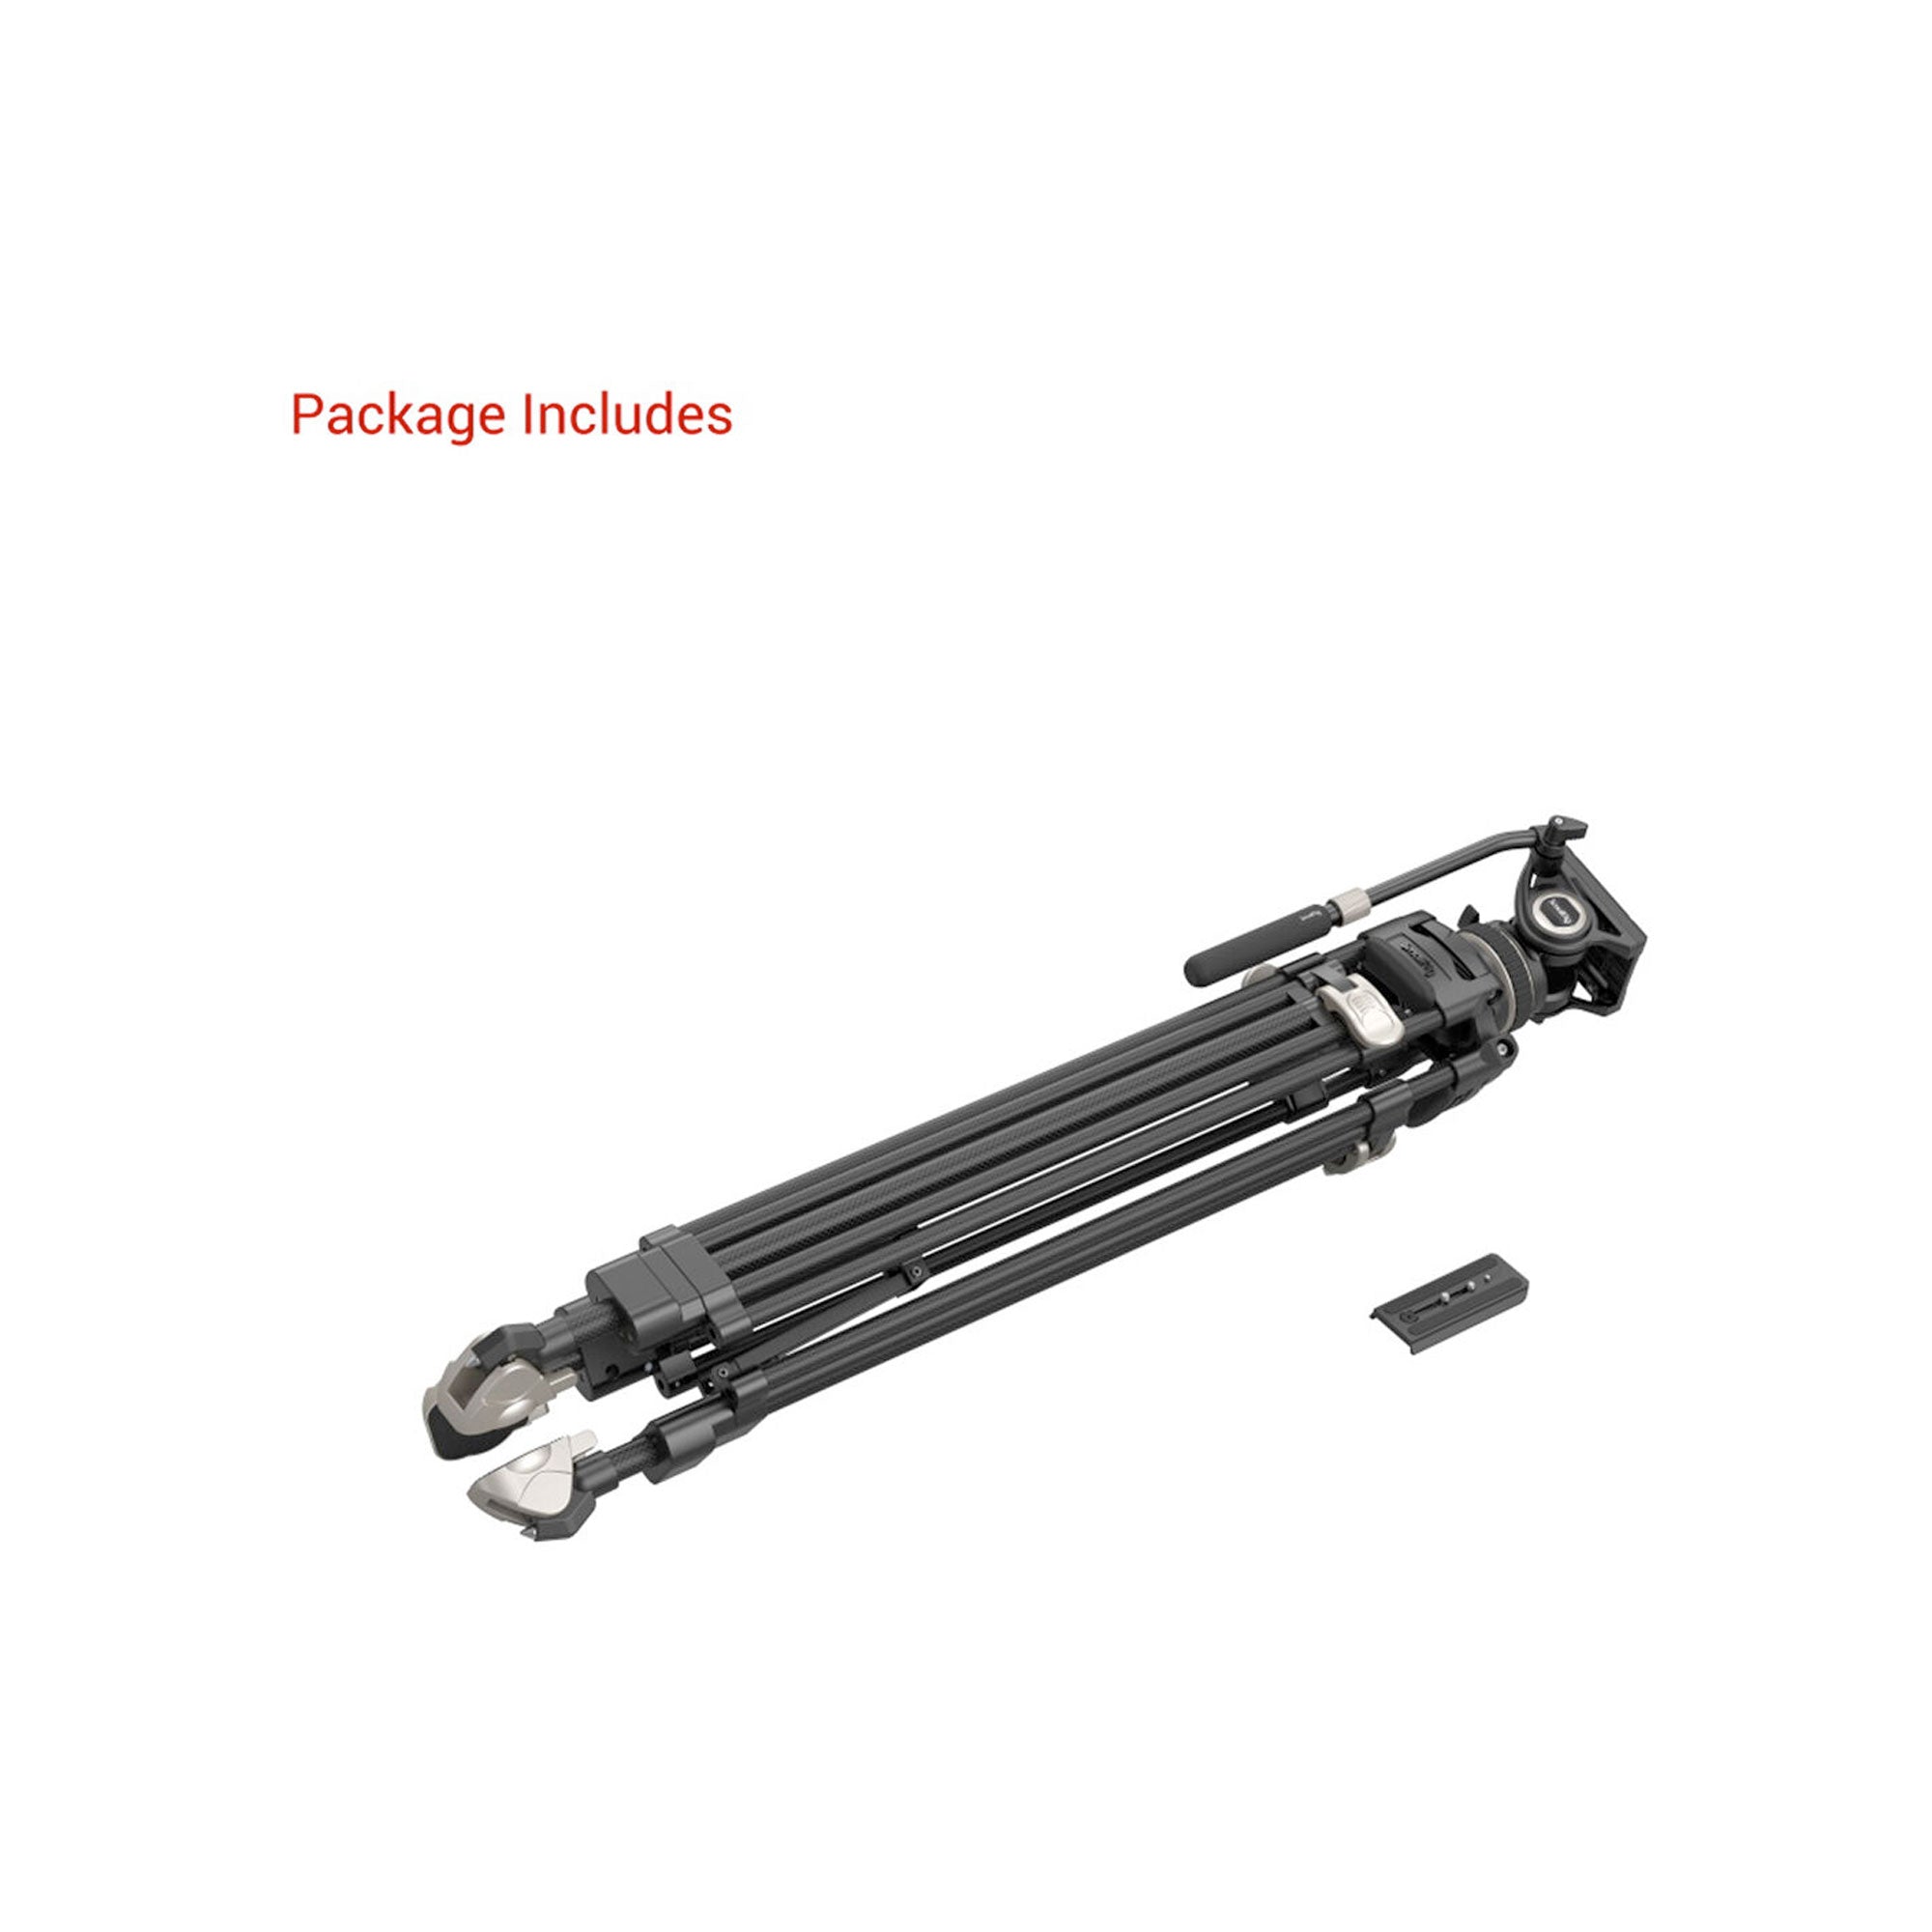 SmallRig FreeBlazer Heavy-Duty Carbon Fiber Tripod Kit AD-100 3989